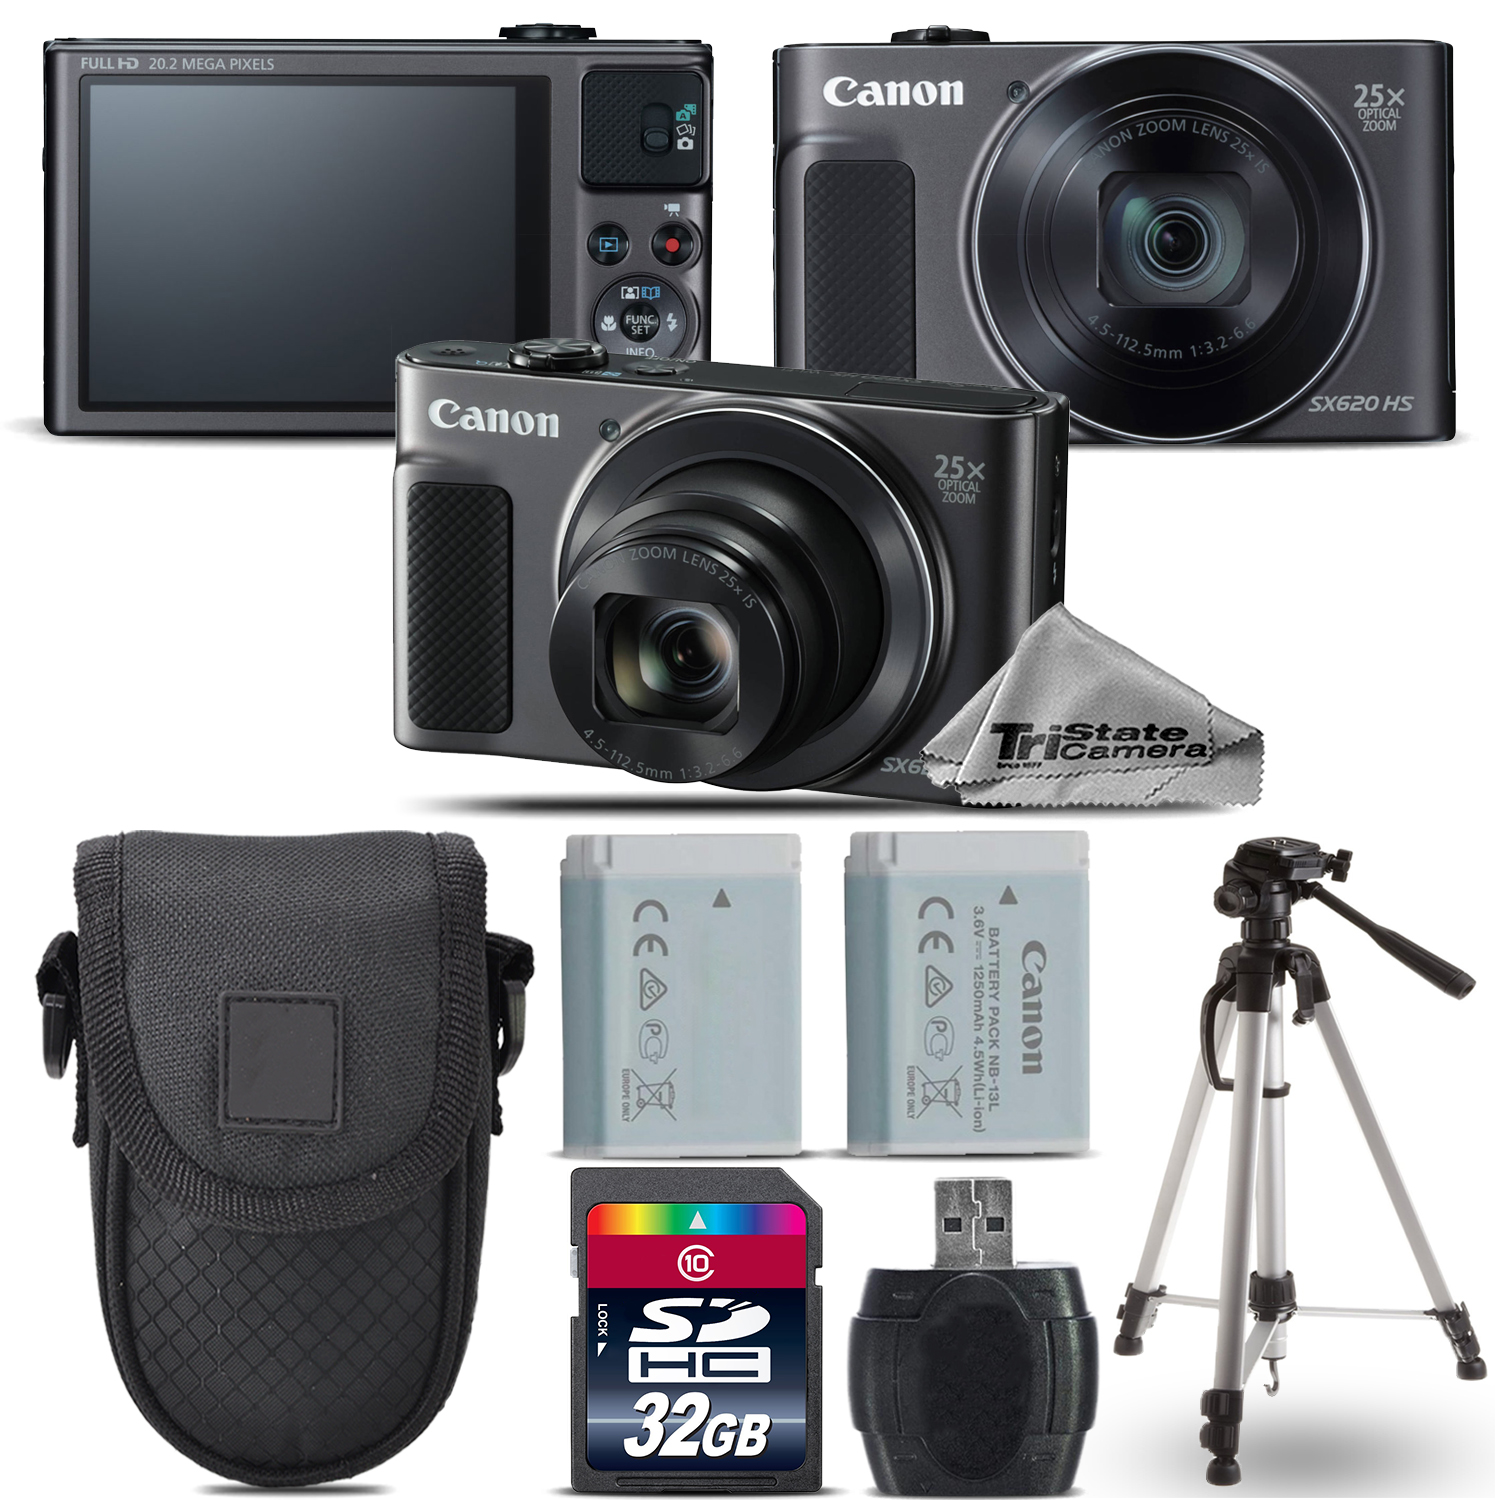 PowerShot SX620 HS Camera (Black) + Extra Battery +Tripod + Case -32GB Kit *FREE SHIPPING*